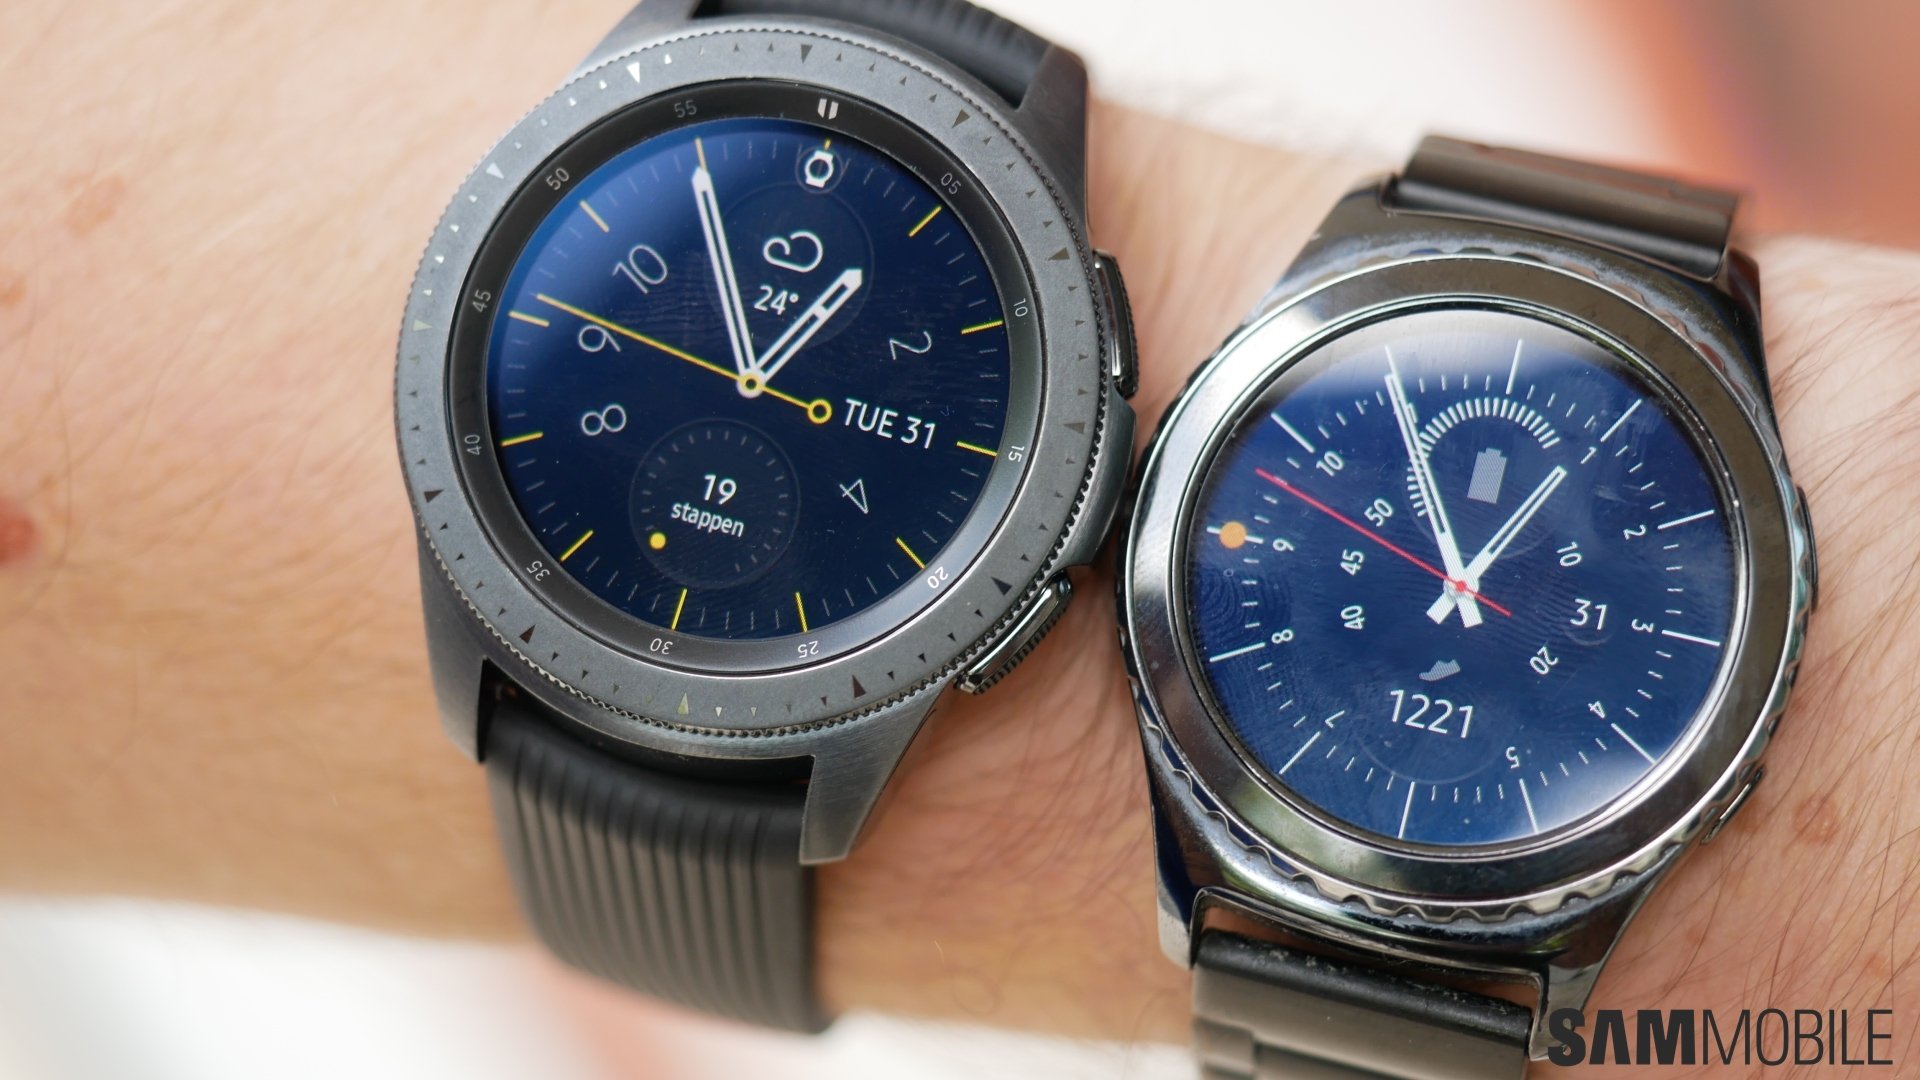 Samsung Galaxy Watch vs Samsung Gear S2 